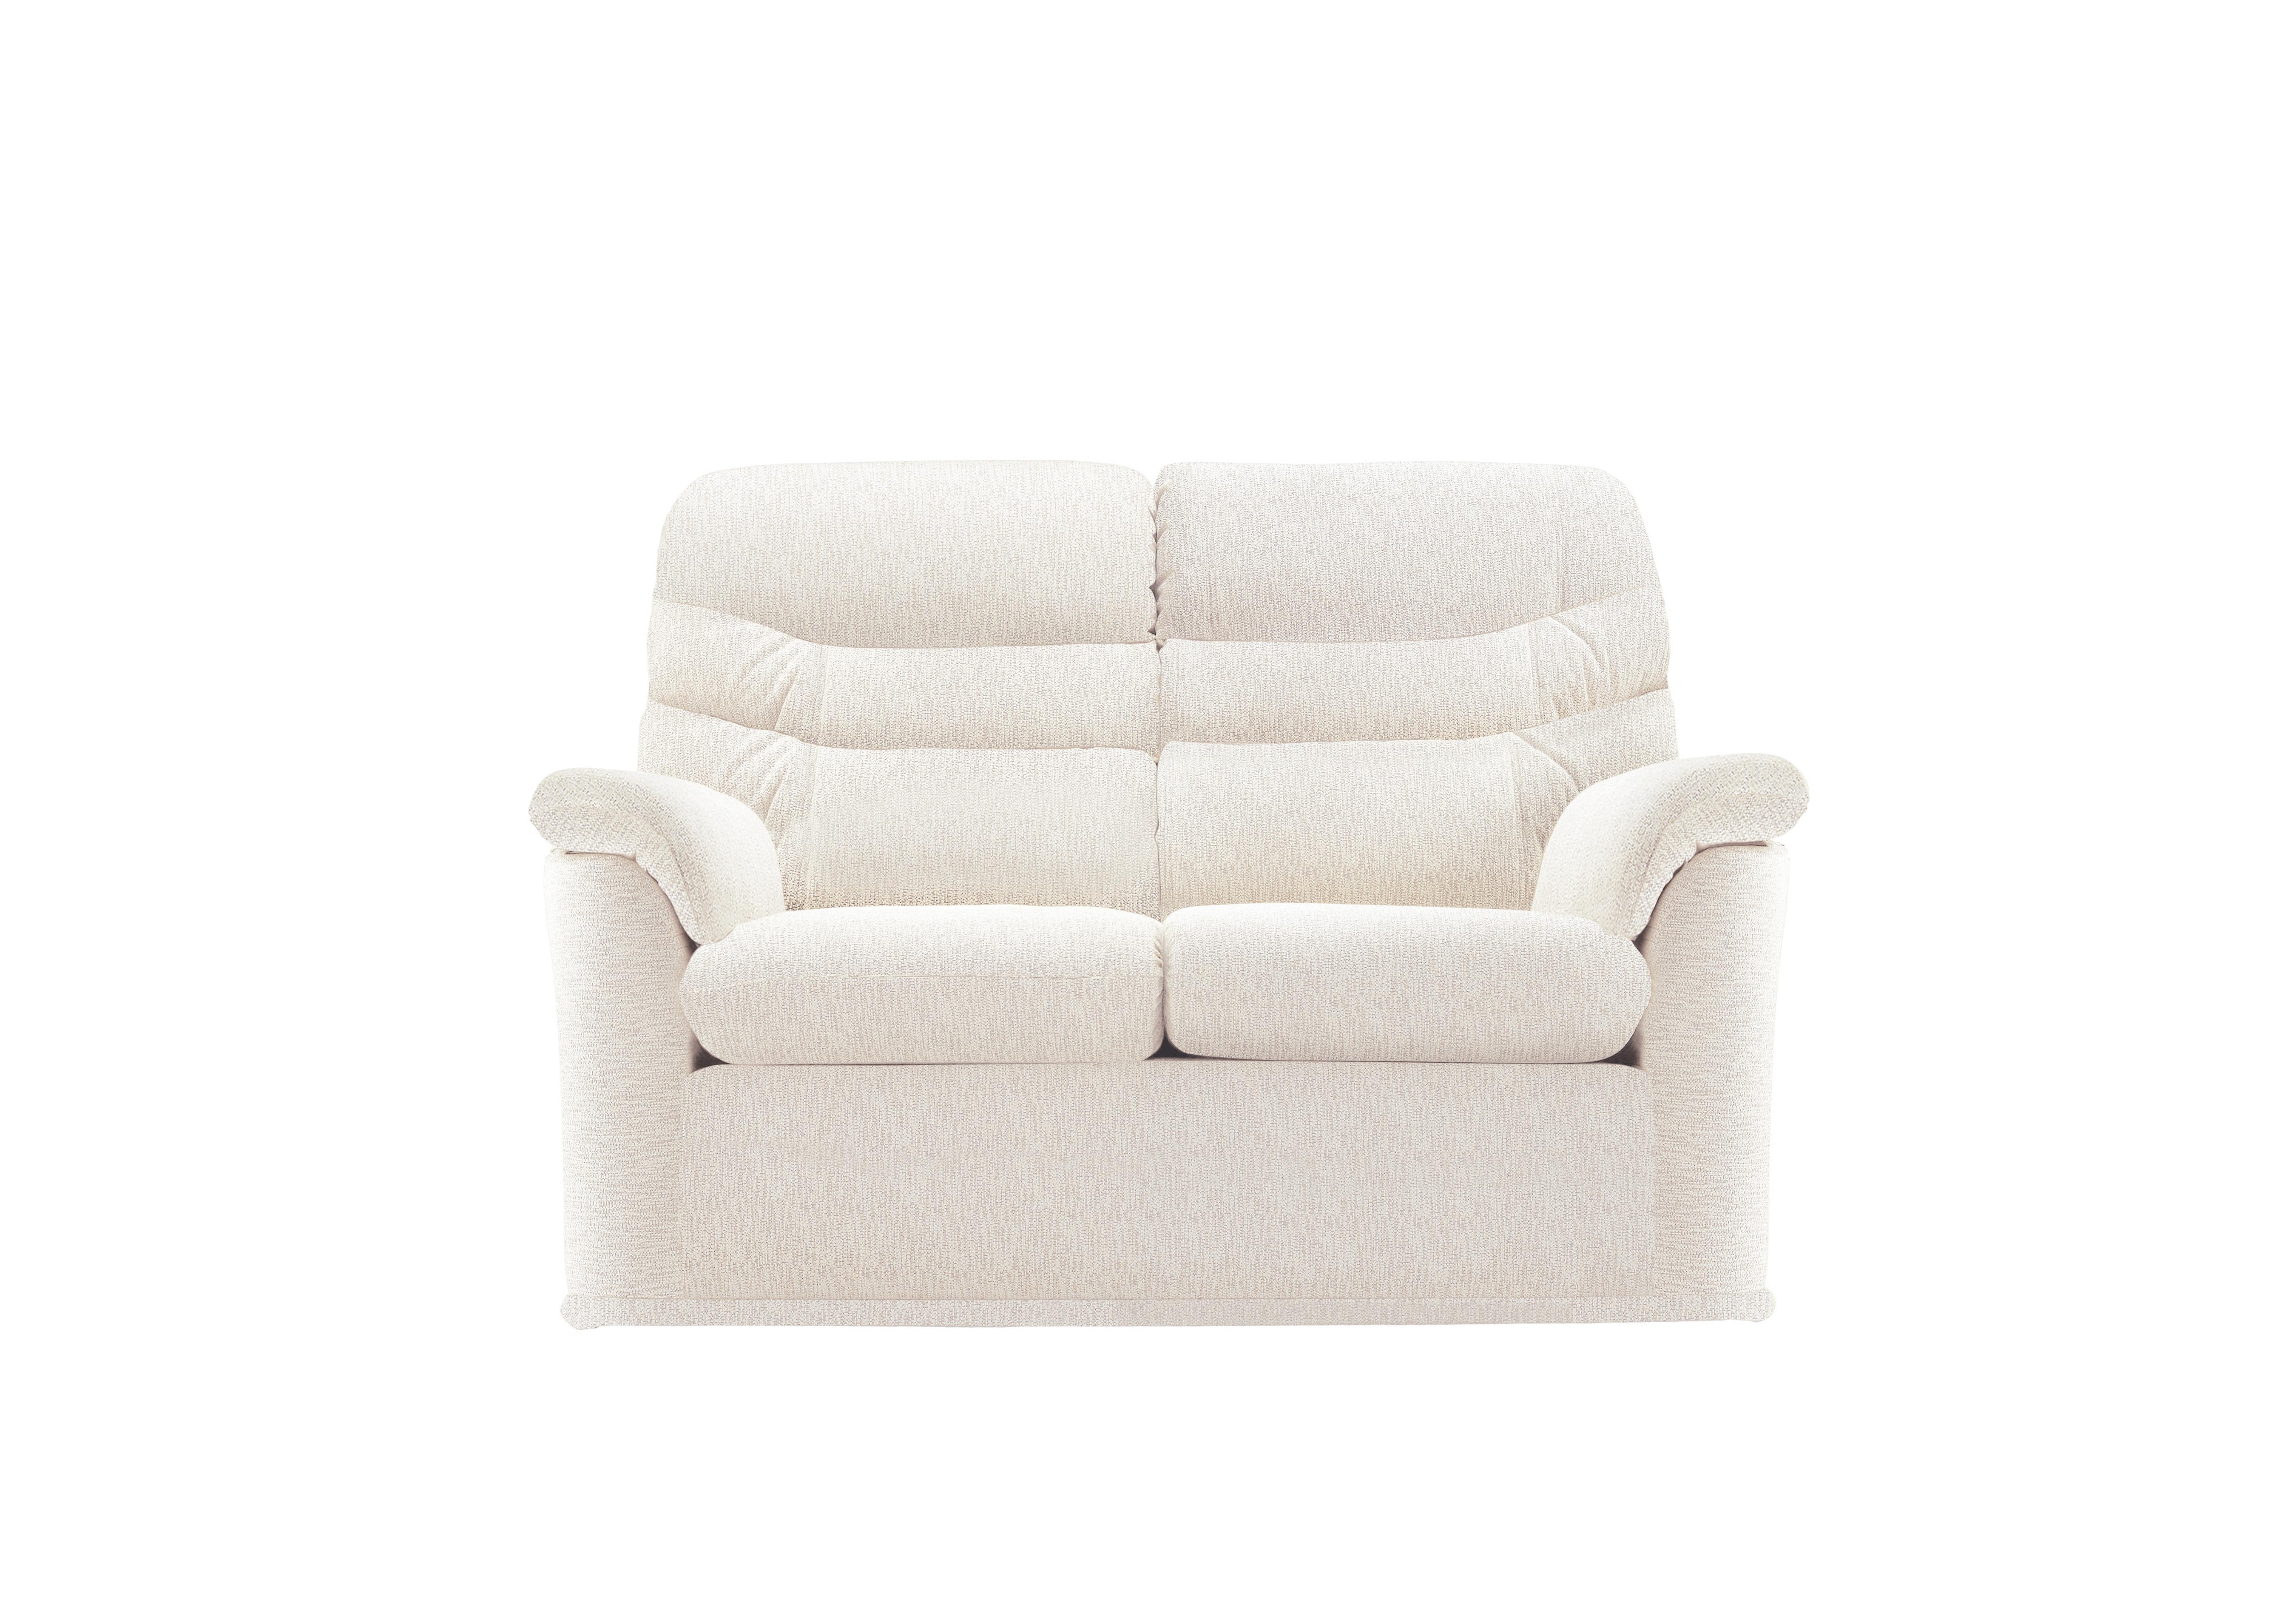 Malvern 2 Seater Fabric Sofa in C931 Rush Cream on Furniture Village